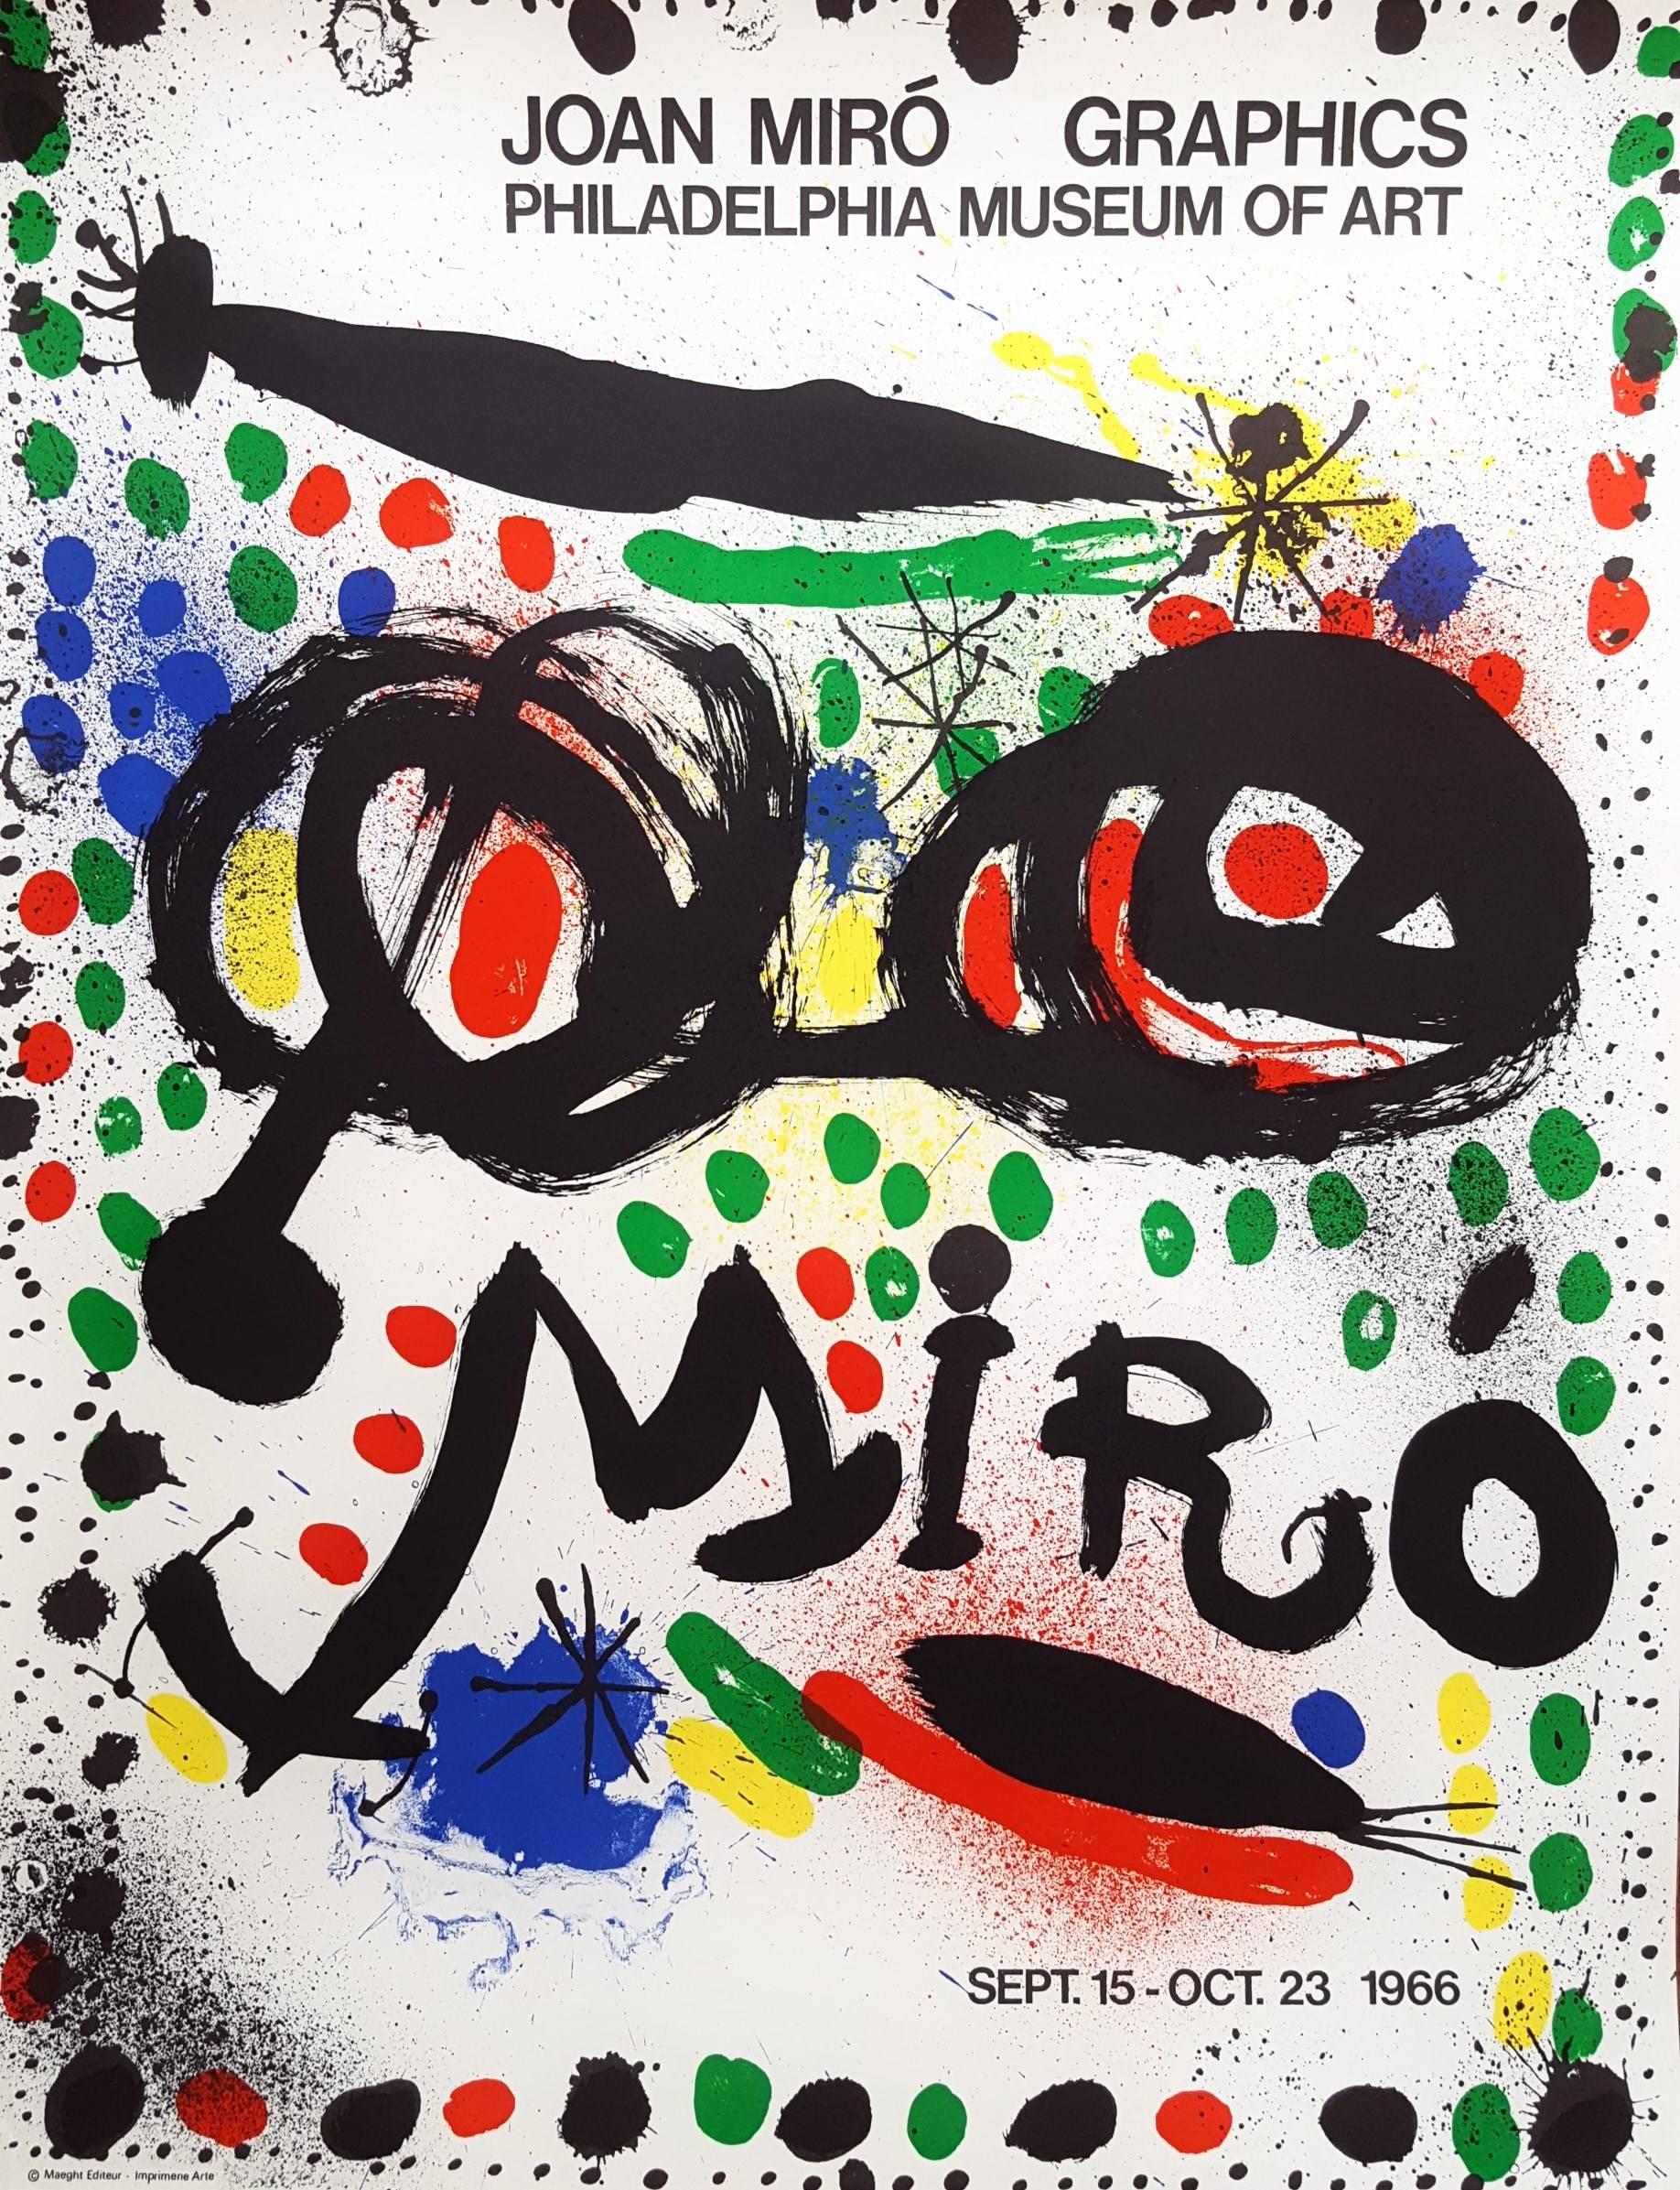 Joan Miró Abstract Print - Graphics: Philadelphia Museum of Art